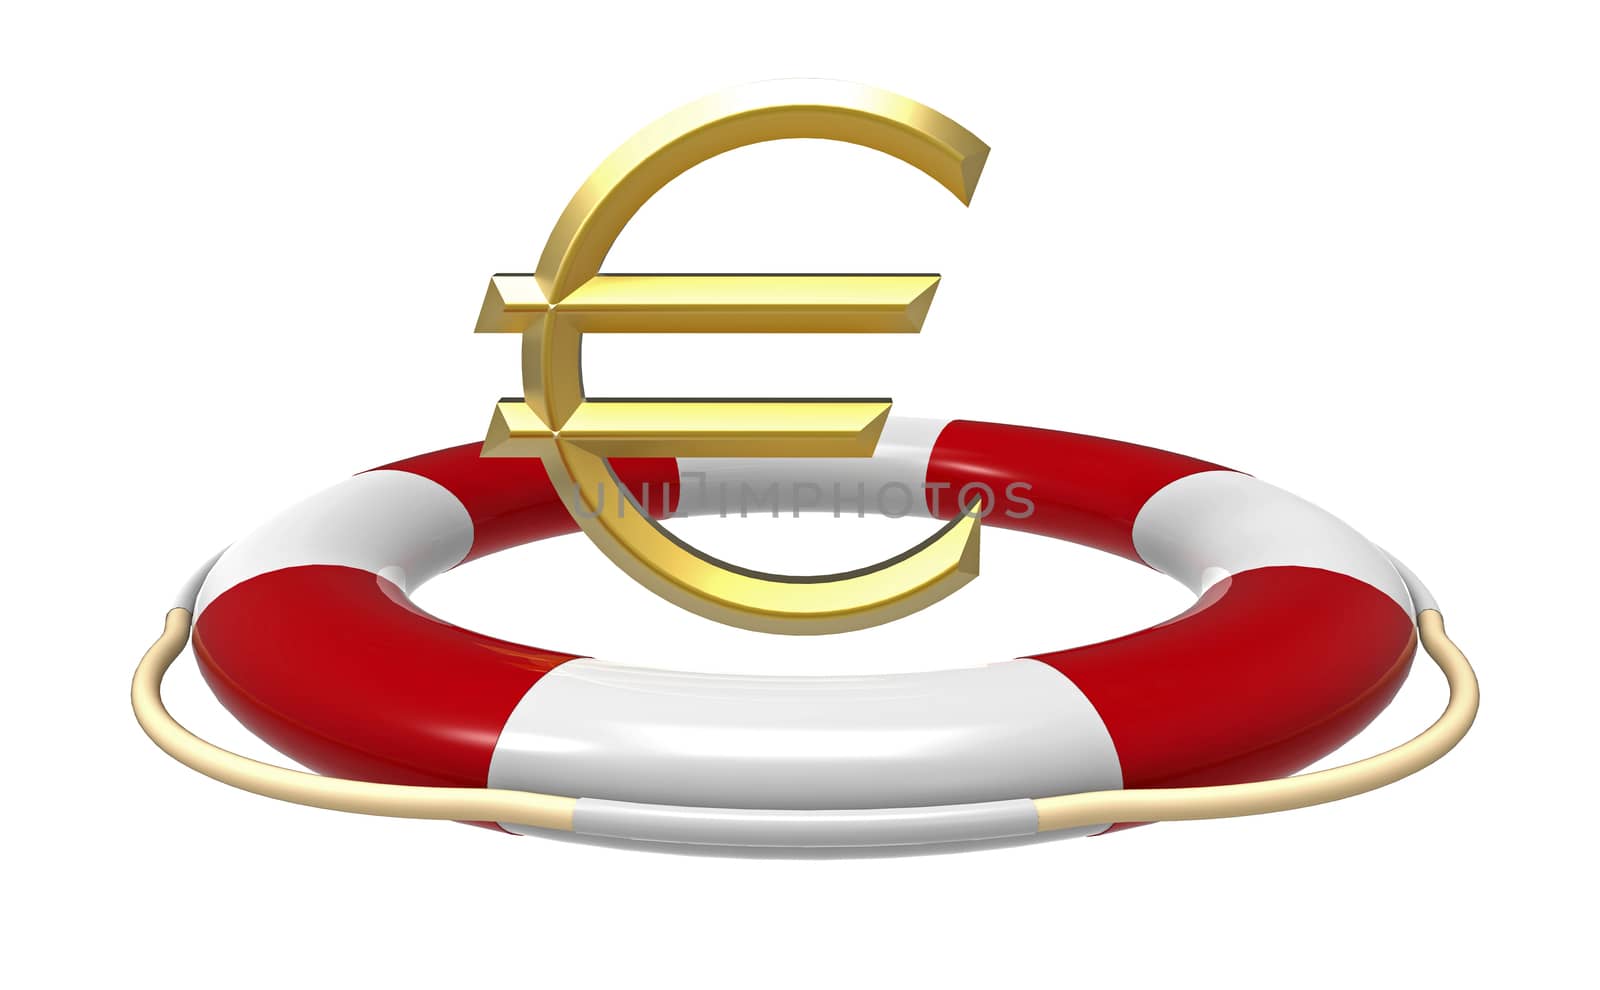 Lifebuoy with euro sign by Boris15